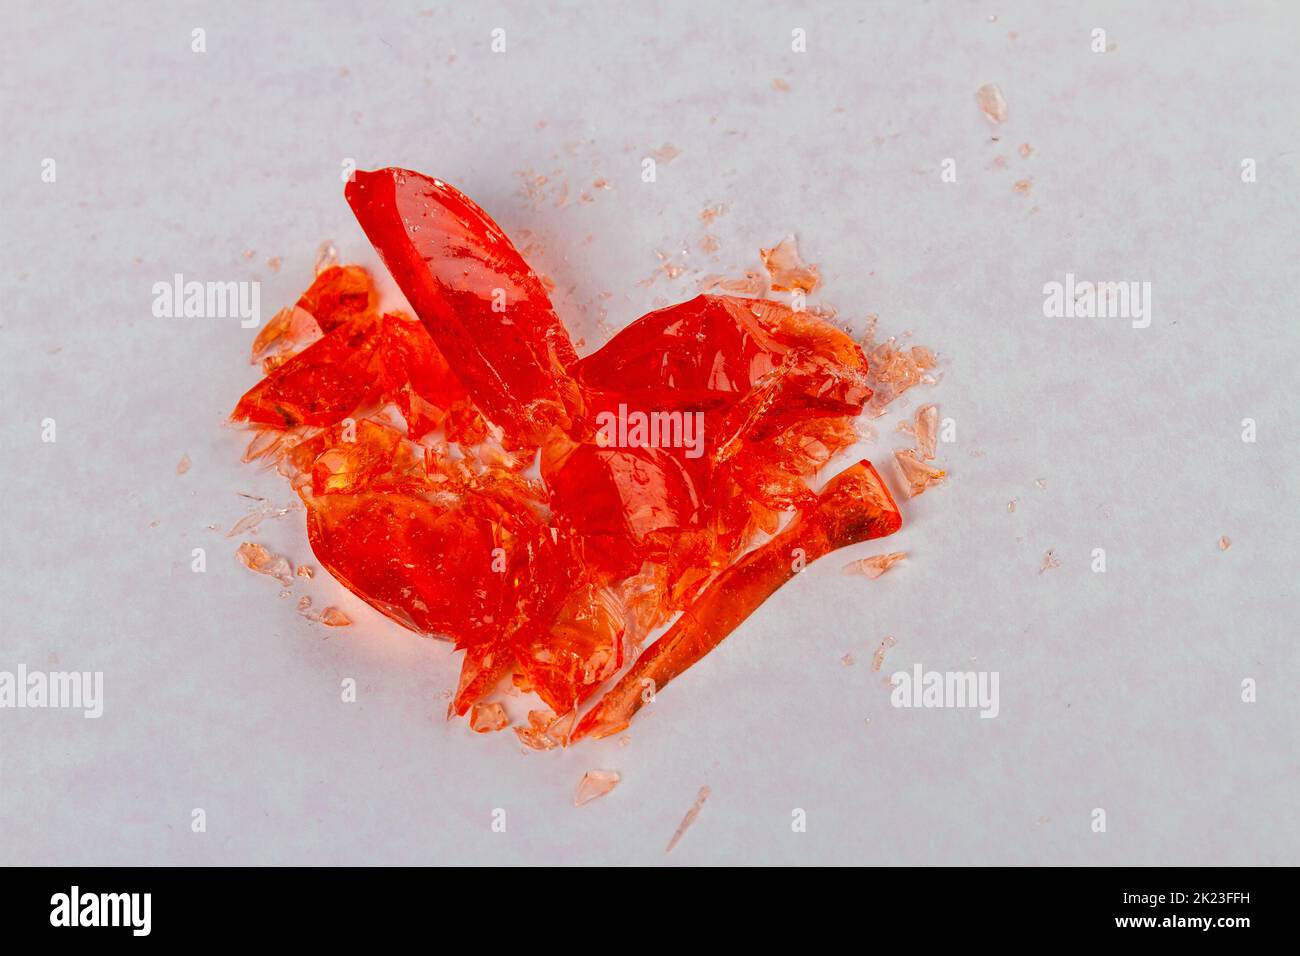 Close up broken heart lollipop on white surface. Broke up concept. Stock Photo